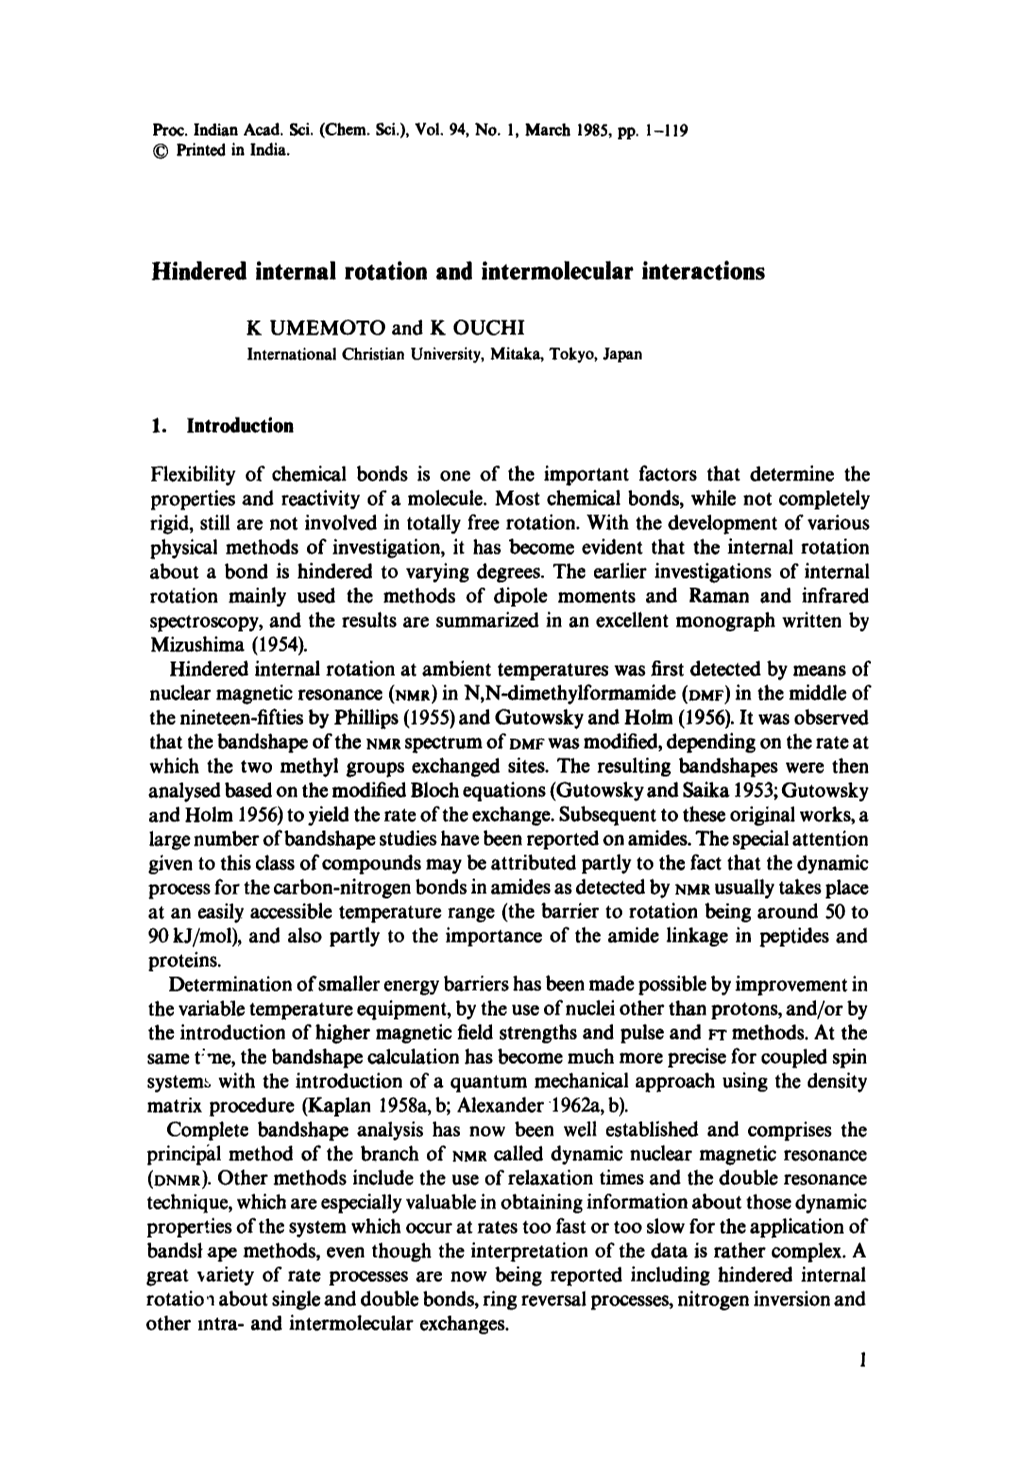 Hindered Internal Rotation and Intermolecular Interactions